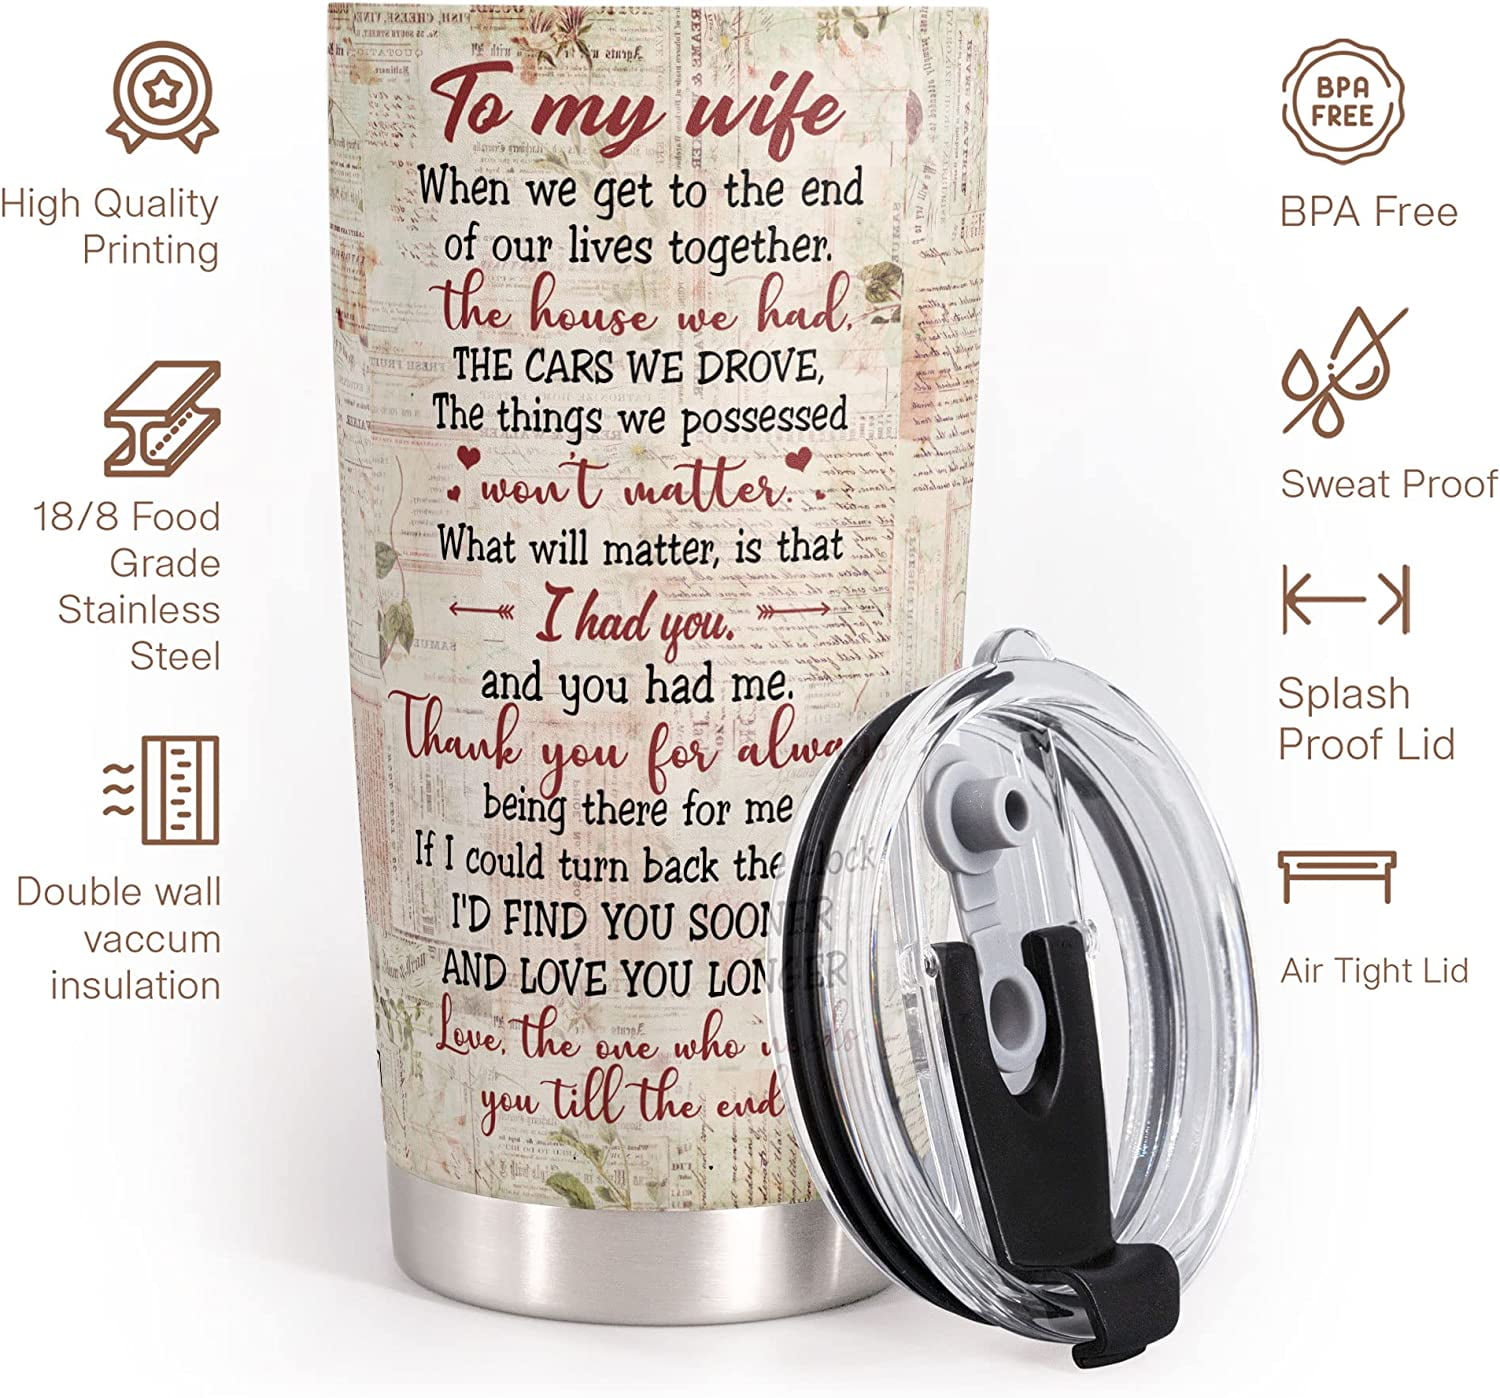 8 Amazing Gift Ideas For Husband on Wedding Anniversary - YouTube